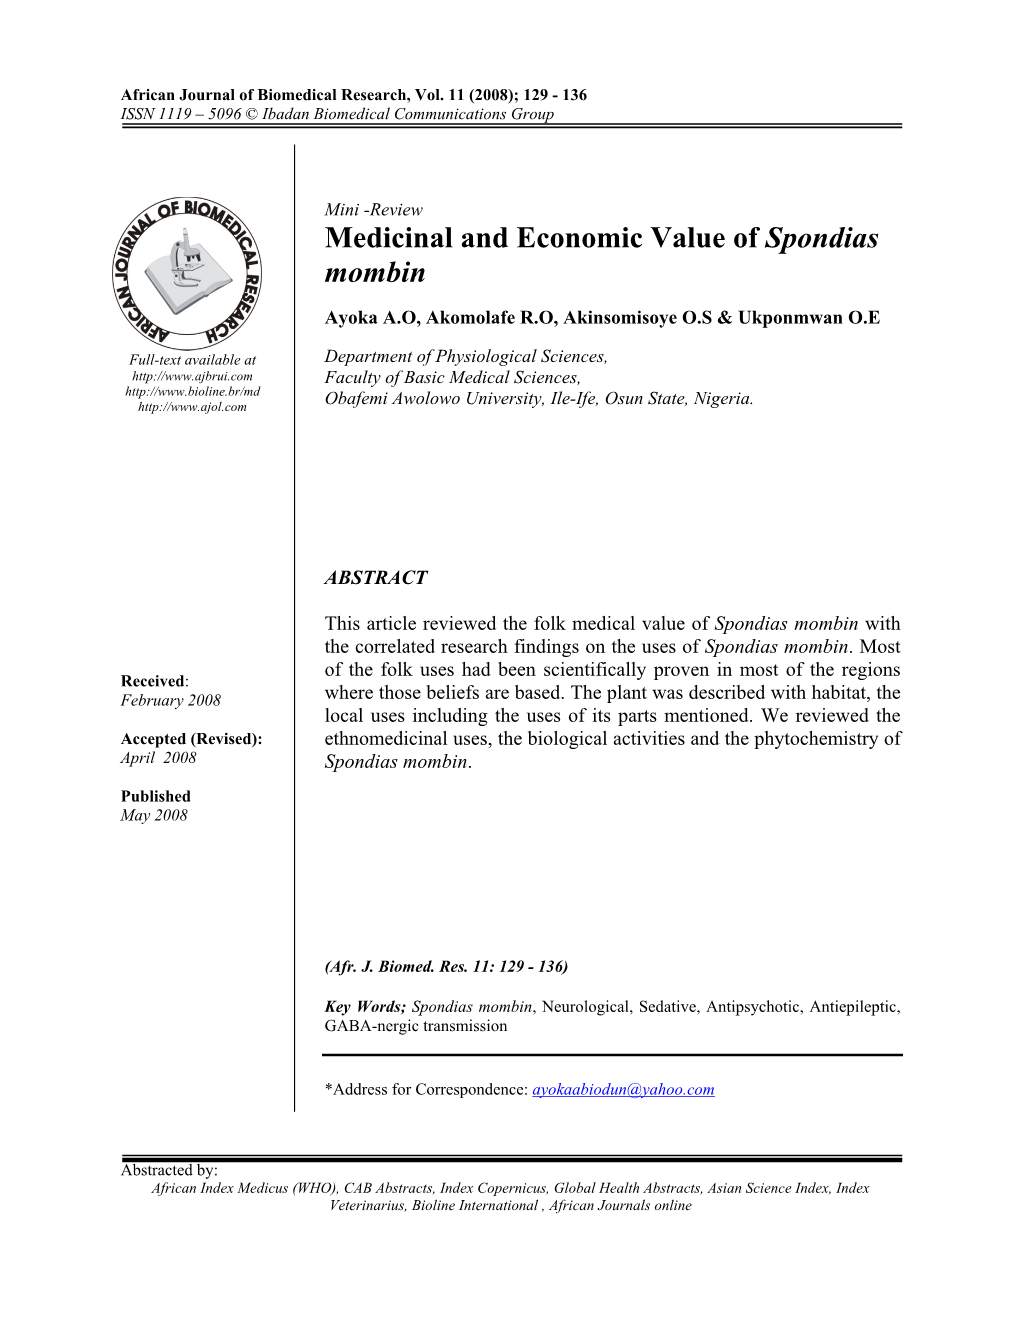 Medicinal and Economic Value of Spondias Mombin